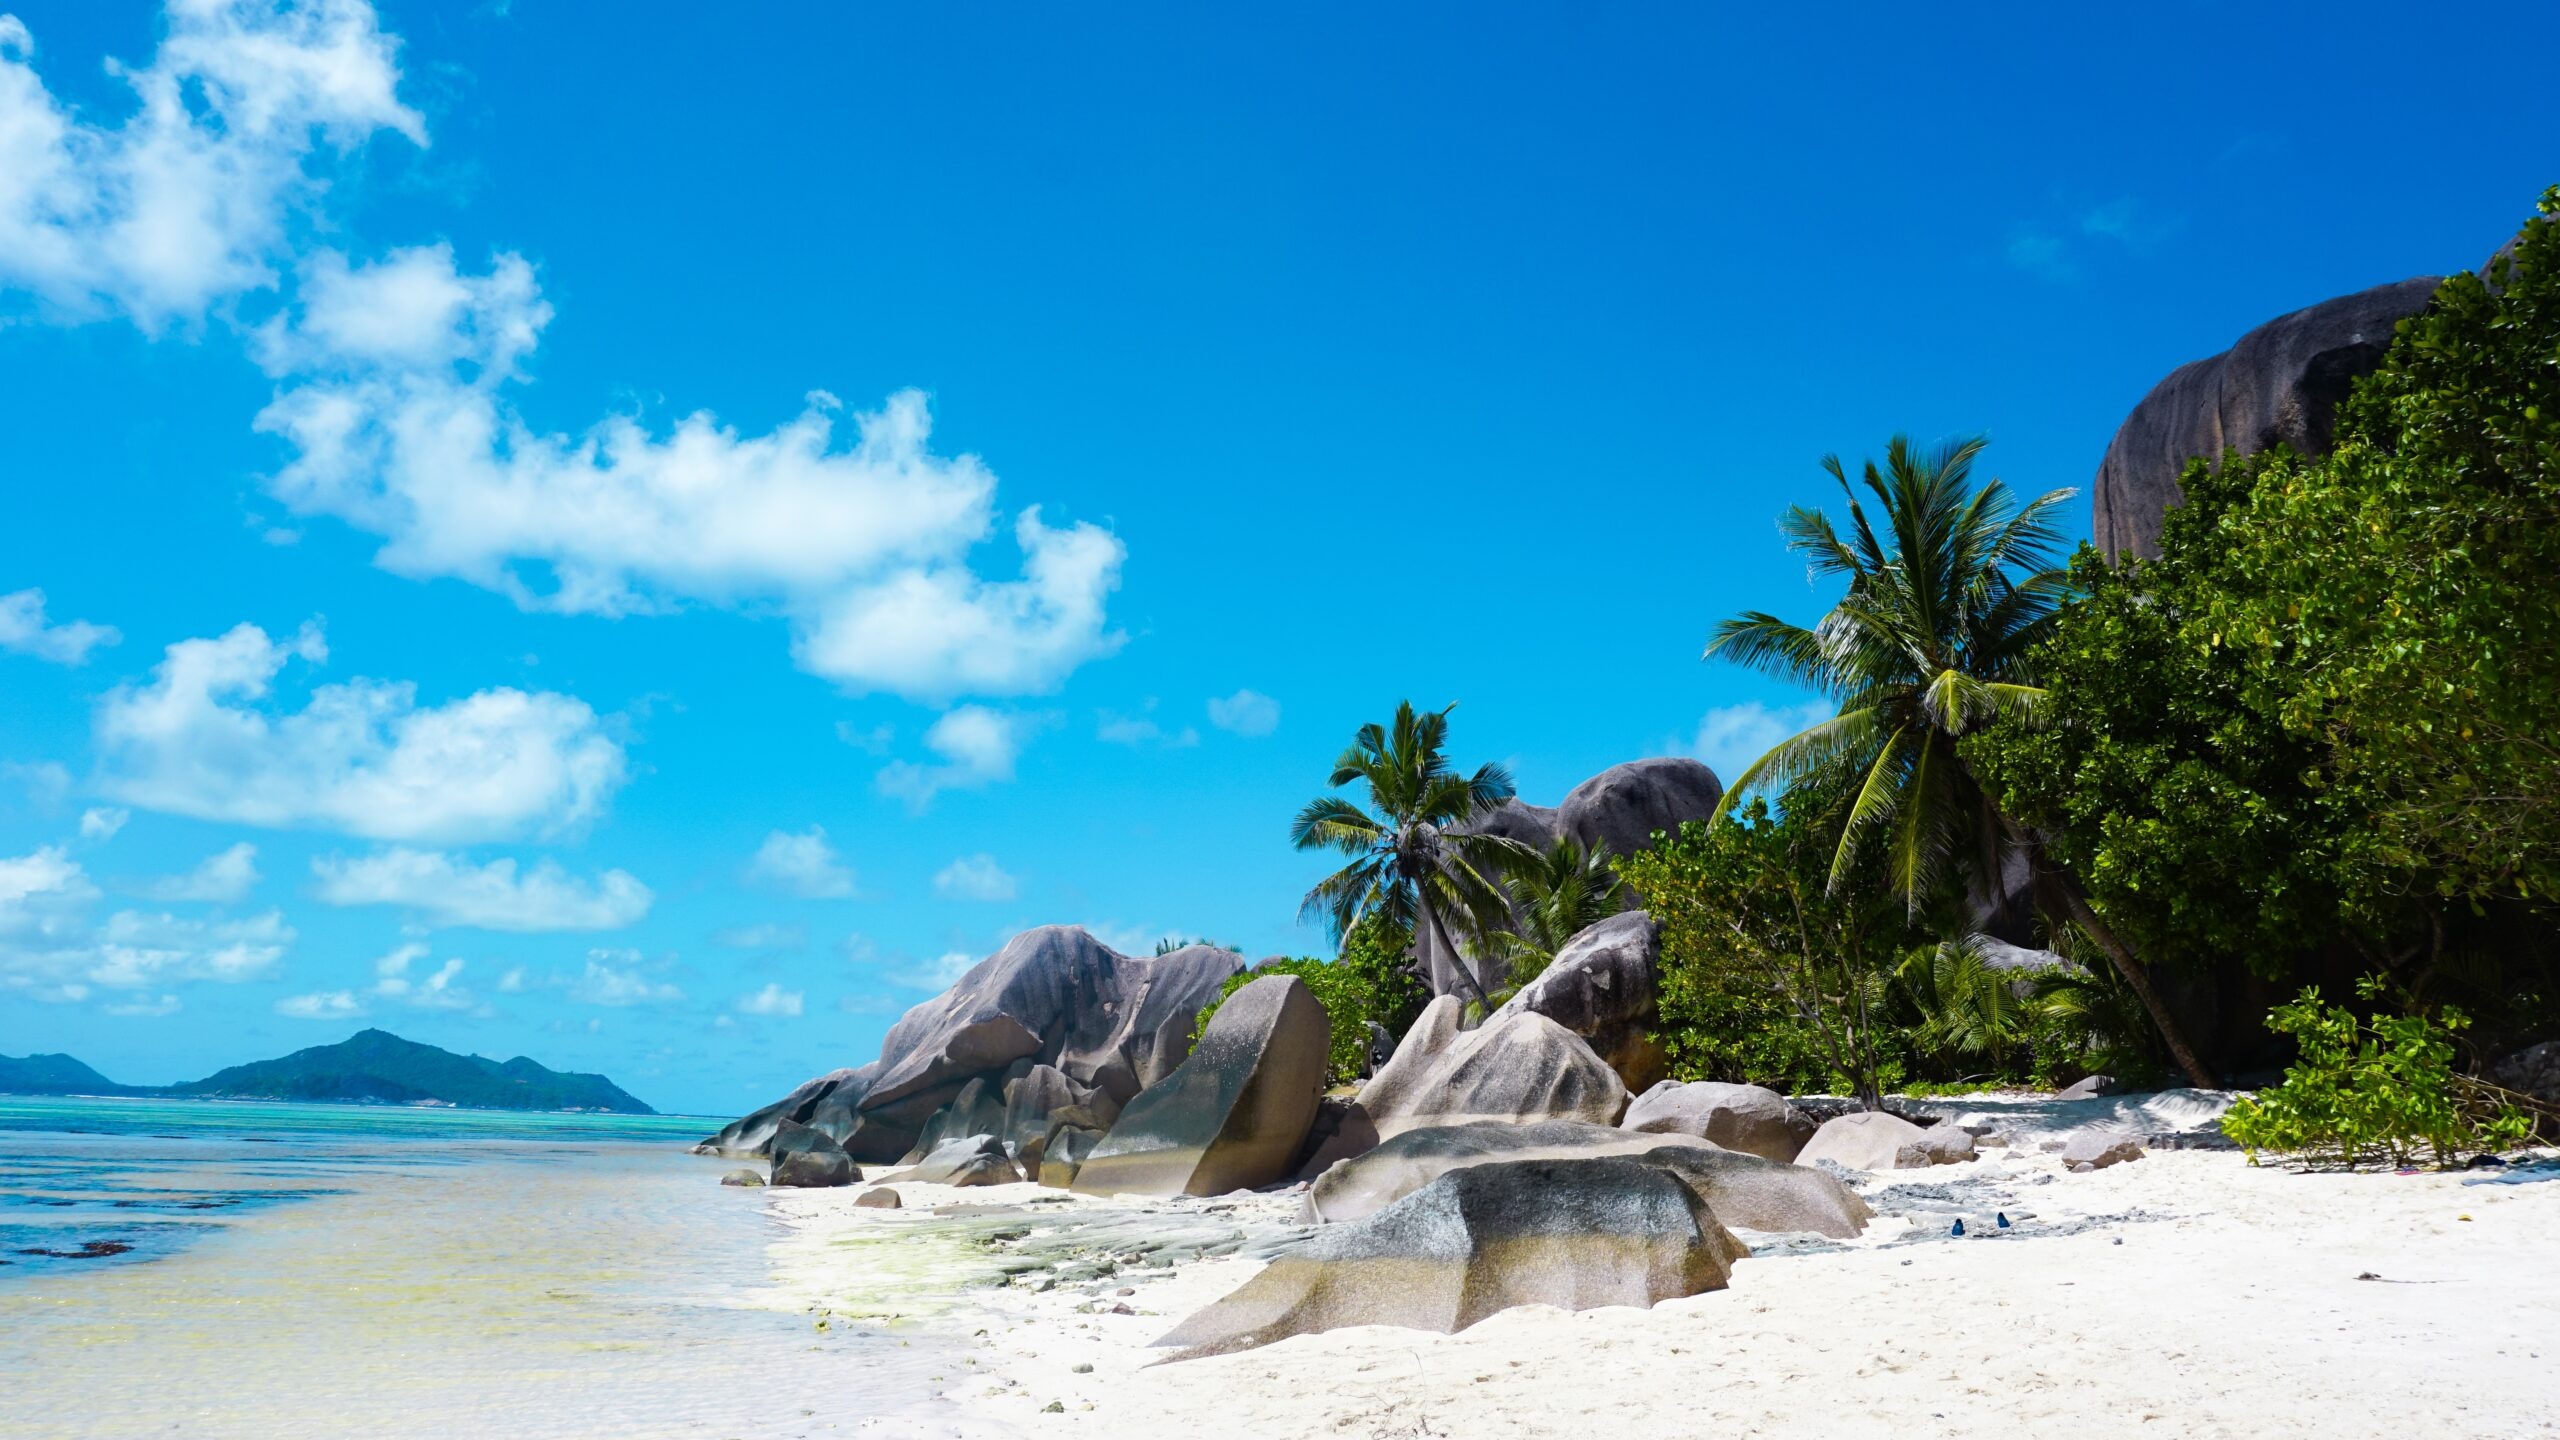 Seychelles dreams, Tranquil haven, Sleep in paradise, Unforgettable escape, 2560x1440 HD Desktop